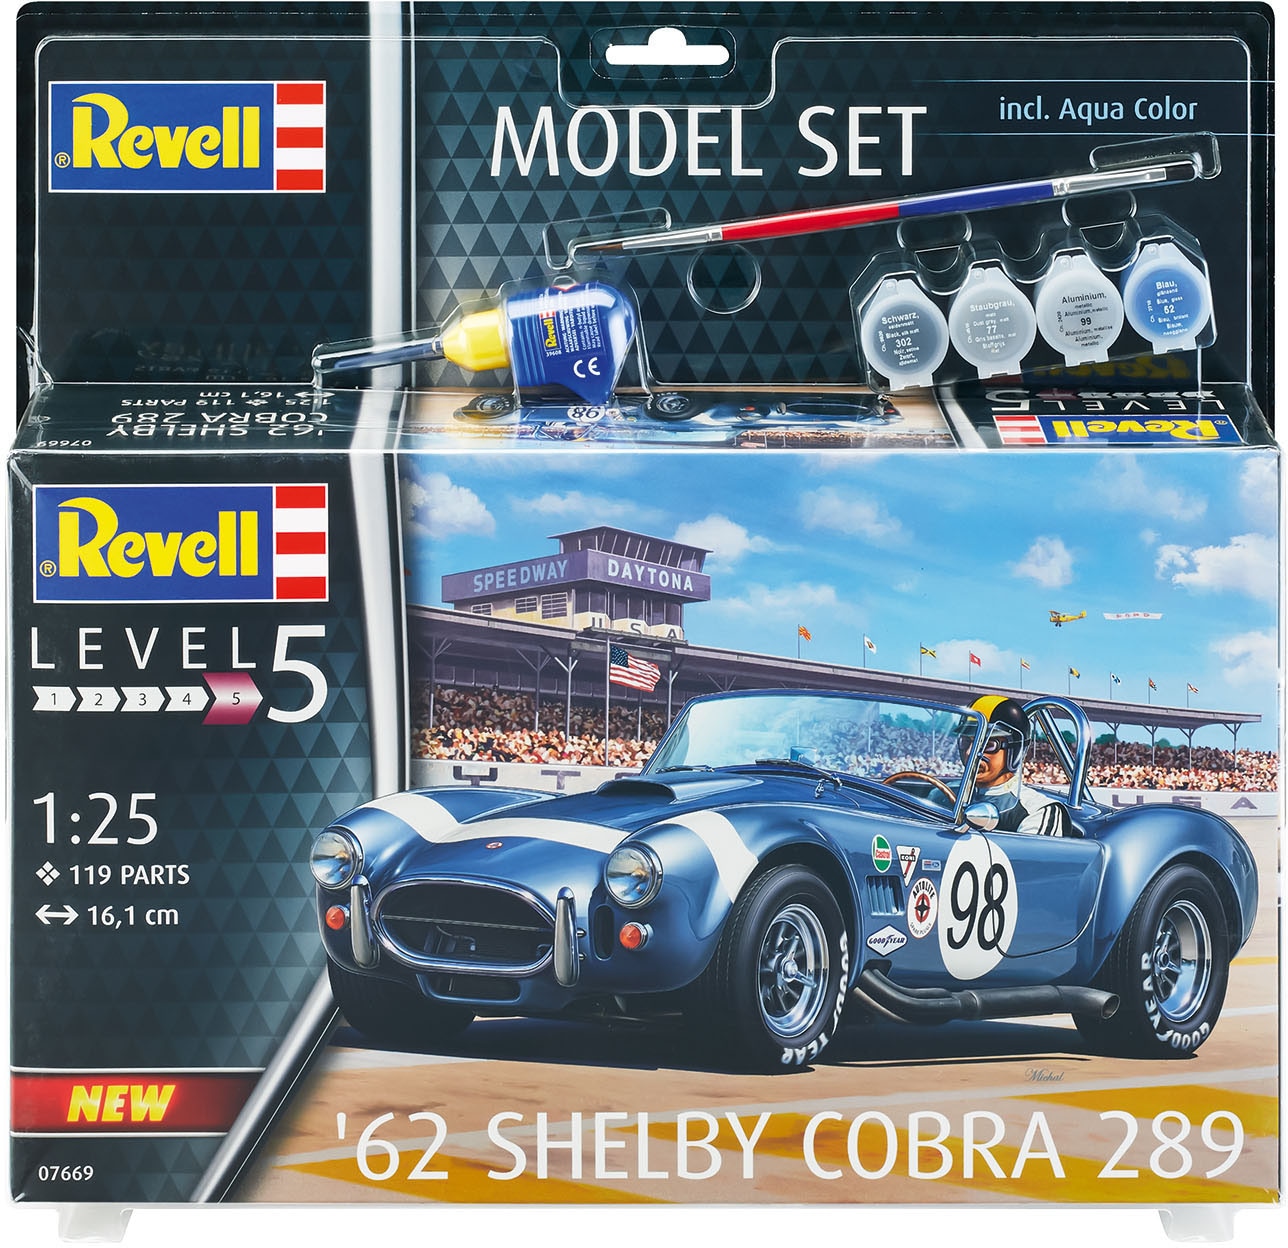 Revell® Modellbausatz »'62 Shelby Cobra 289«, 1:25